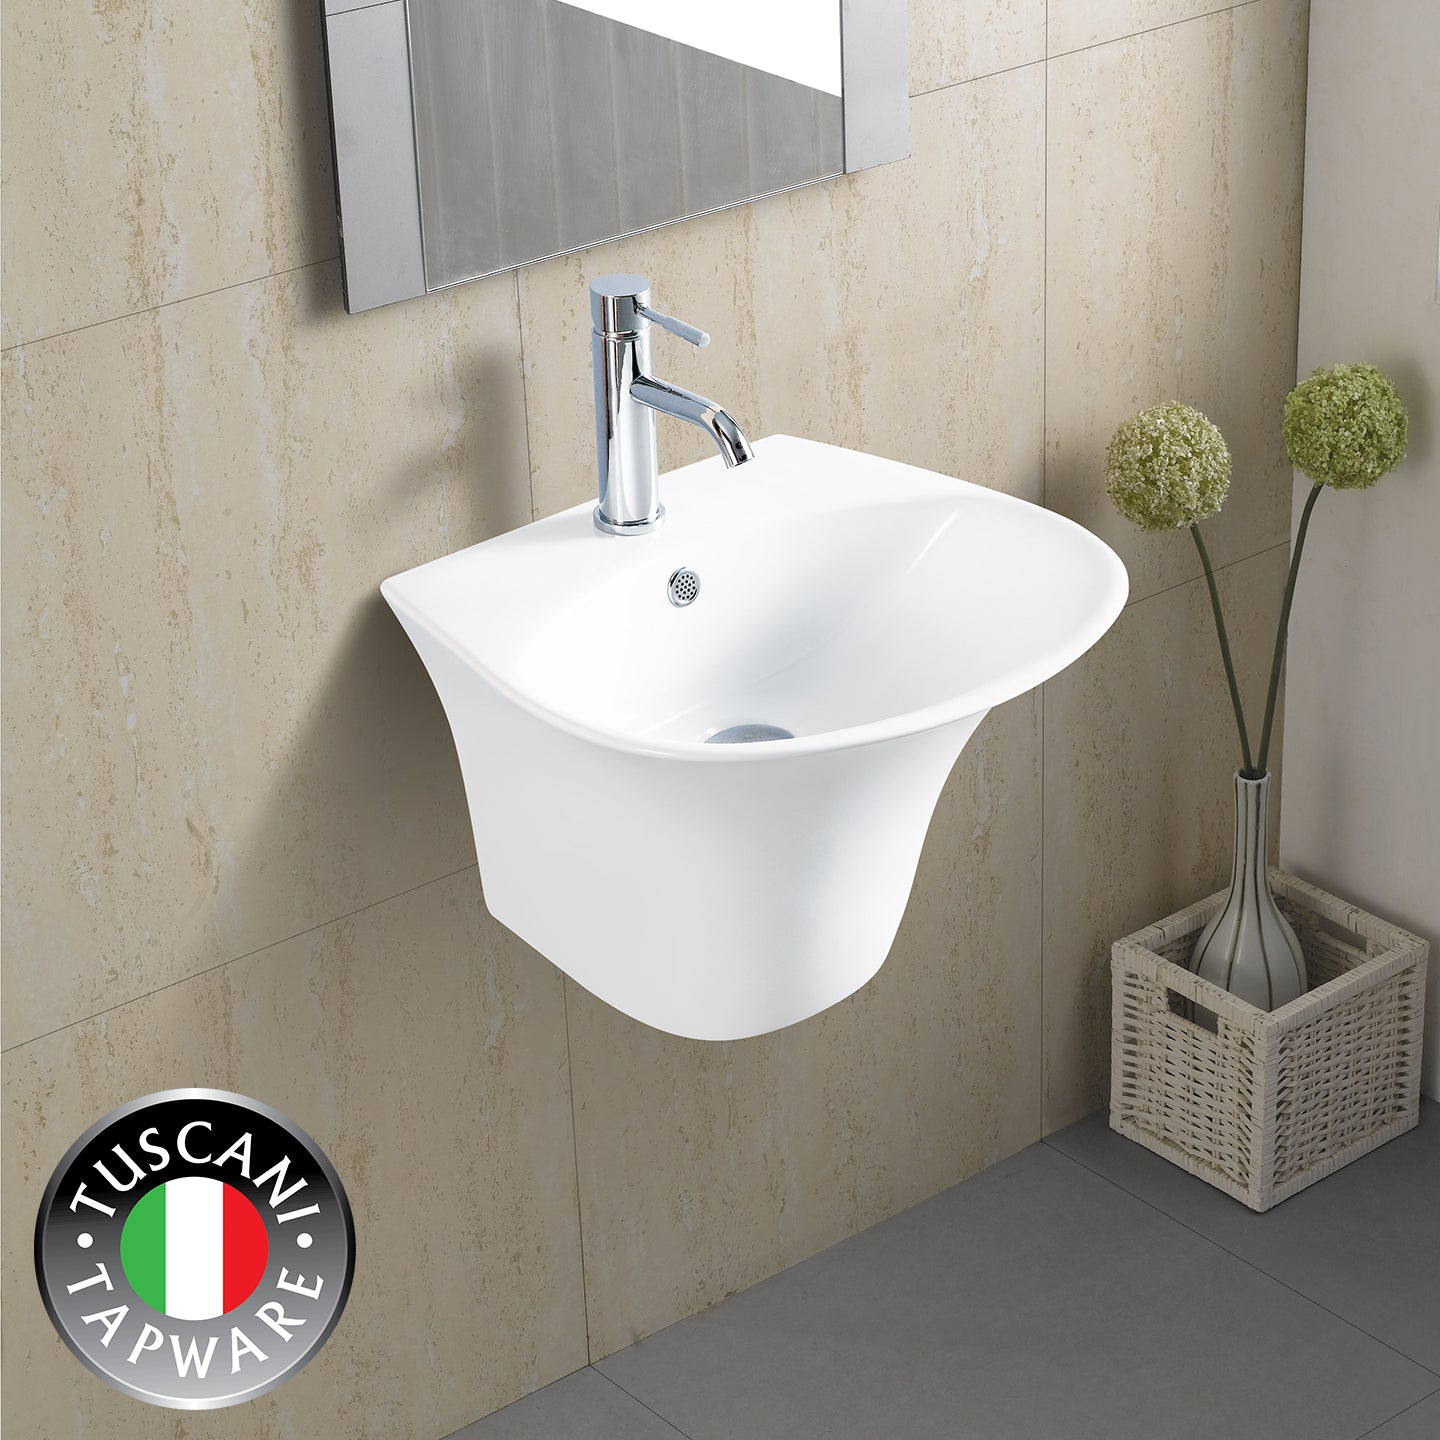 tbj5600c - wall mounted designer basin – tuscani italy pte ltd